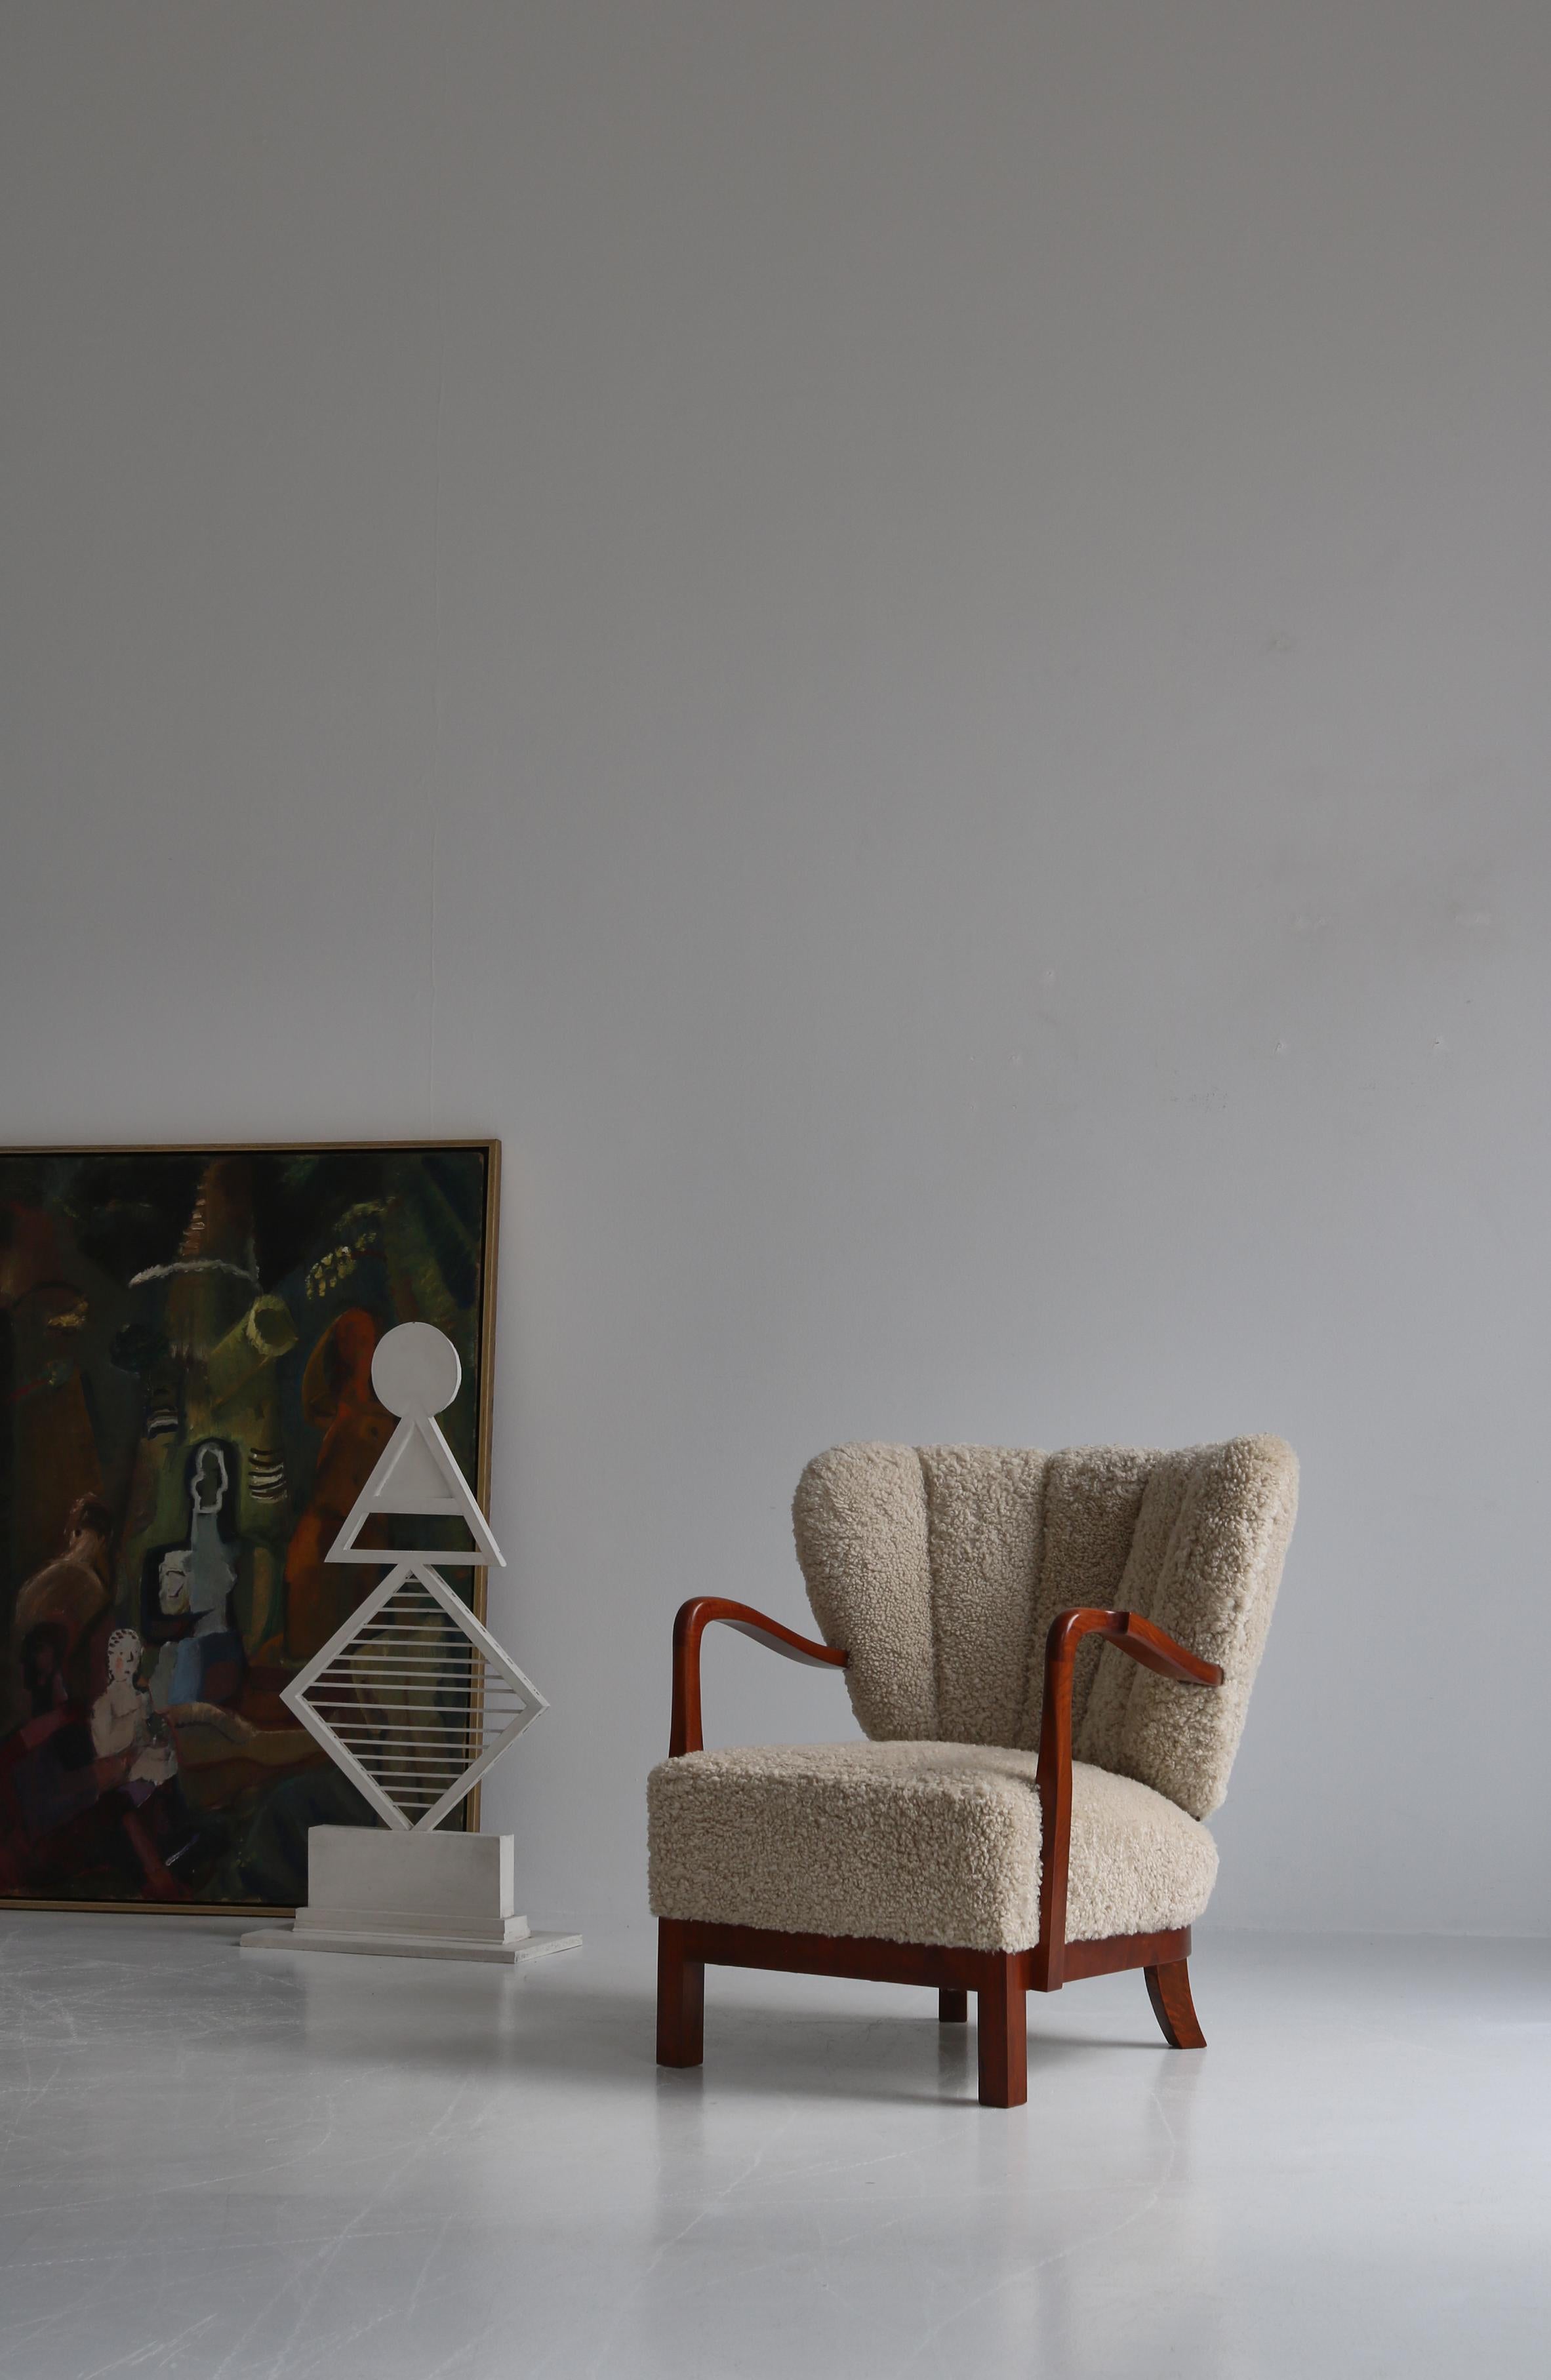 Viggo Boesen Lounge Chairs in Nutwood and Sheepskin, 1930s Danish Modern For Sale 15